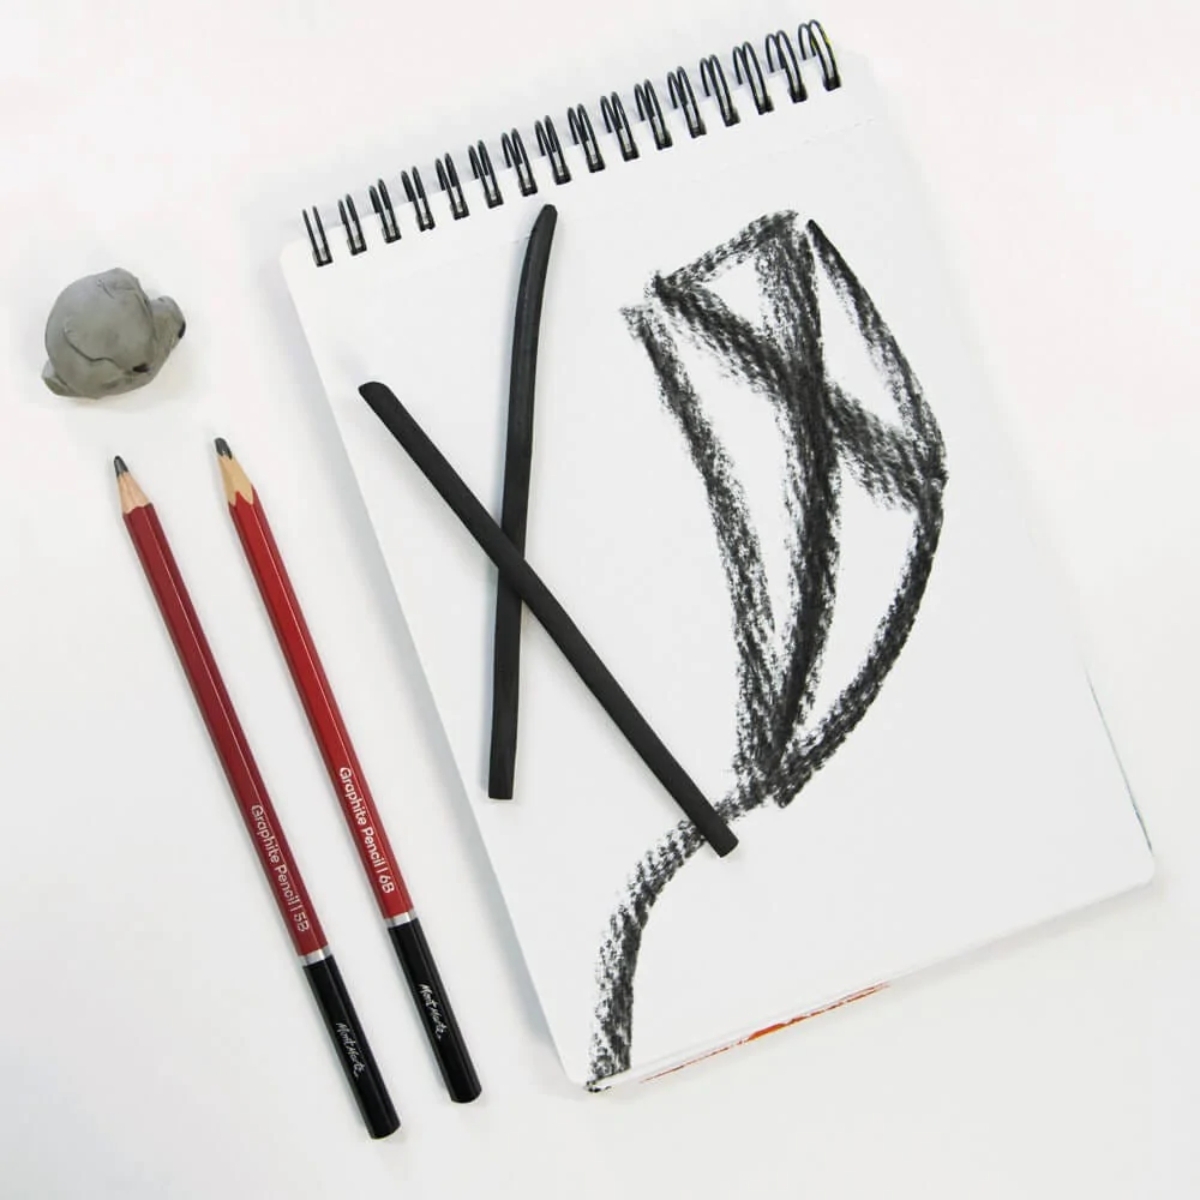 Drawing & Sketching Kit - Reeves Drawing Set - Beginner Art Kits at Weekend  Kits